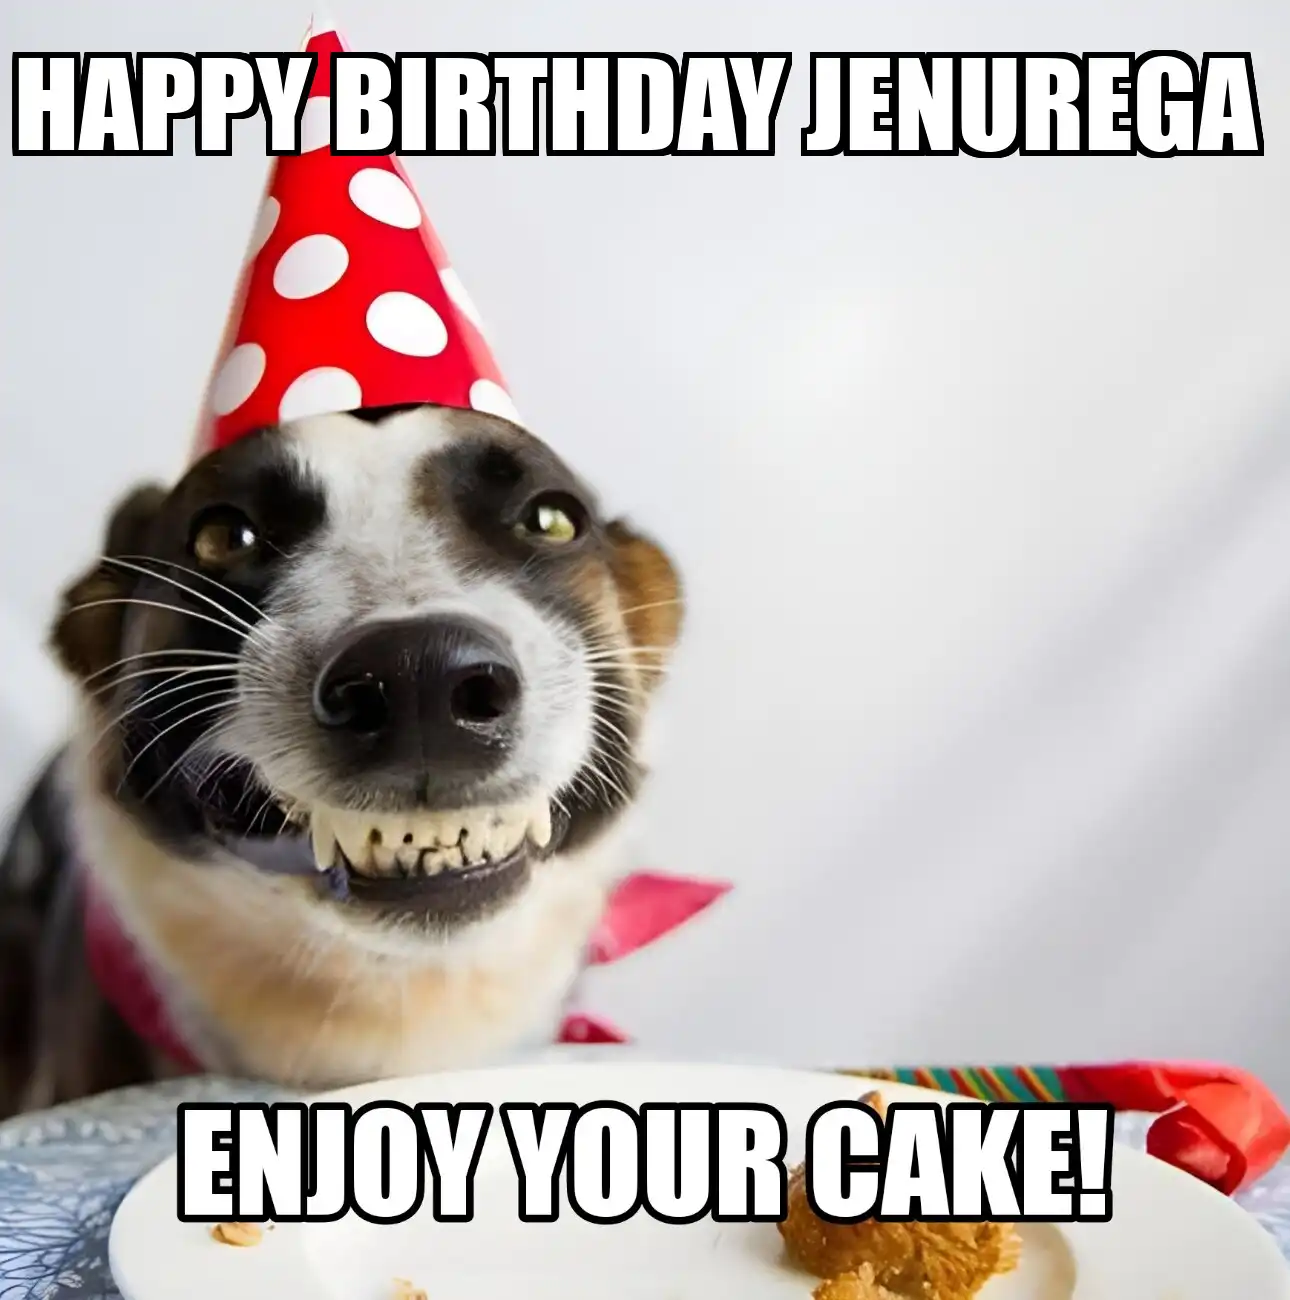 Happy Birthday Jenurega Enjoy Your Cake Dog Meme